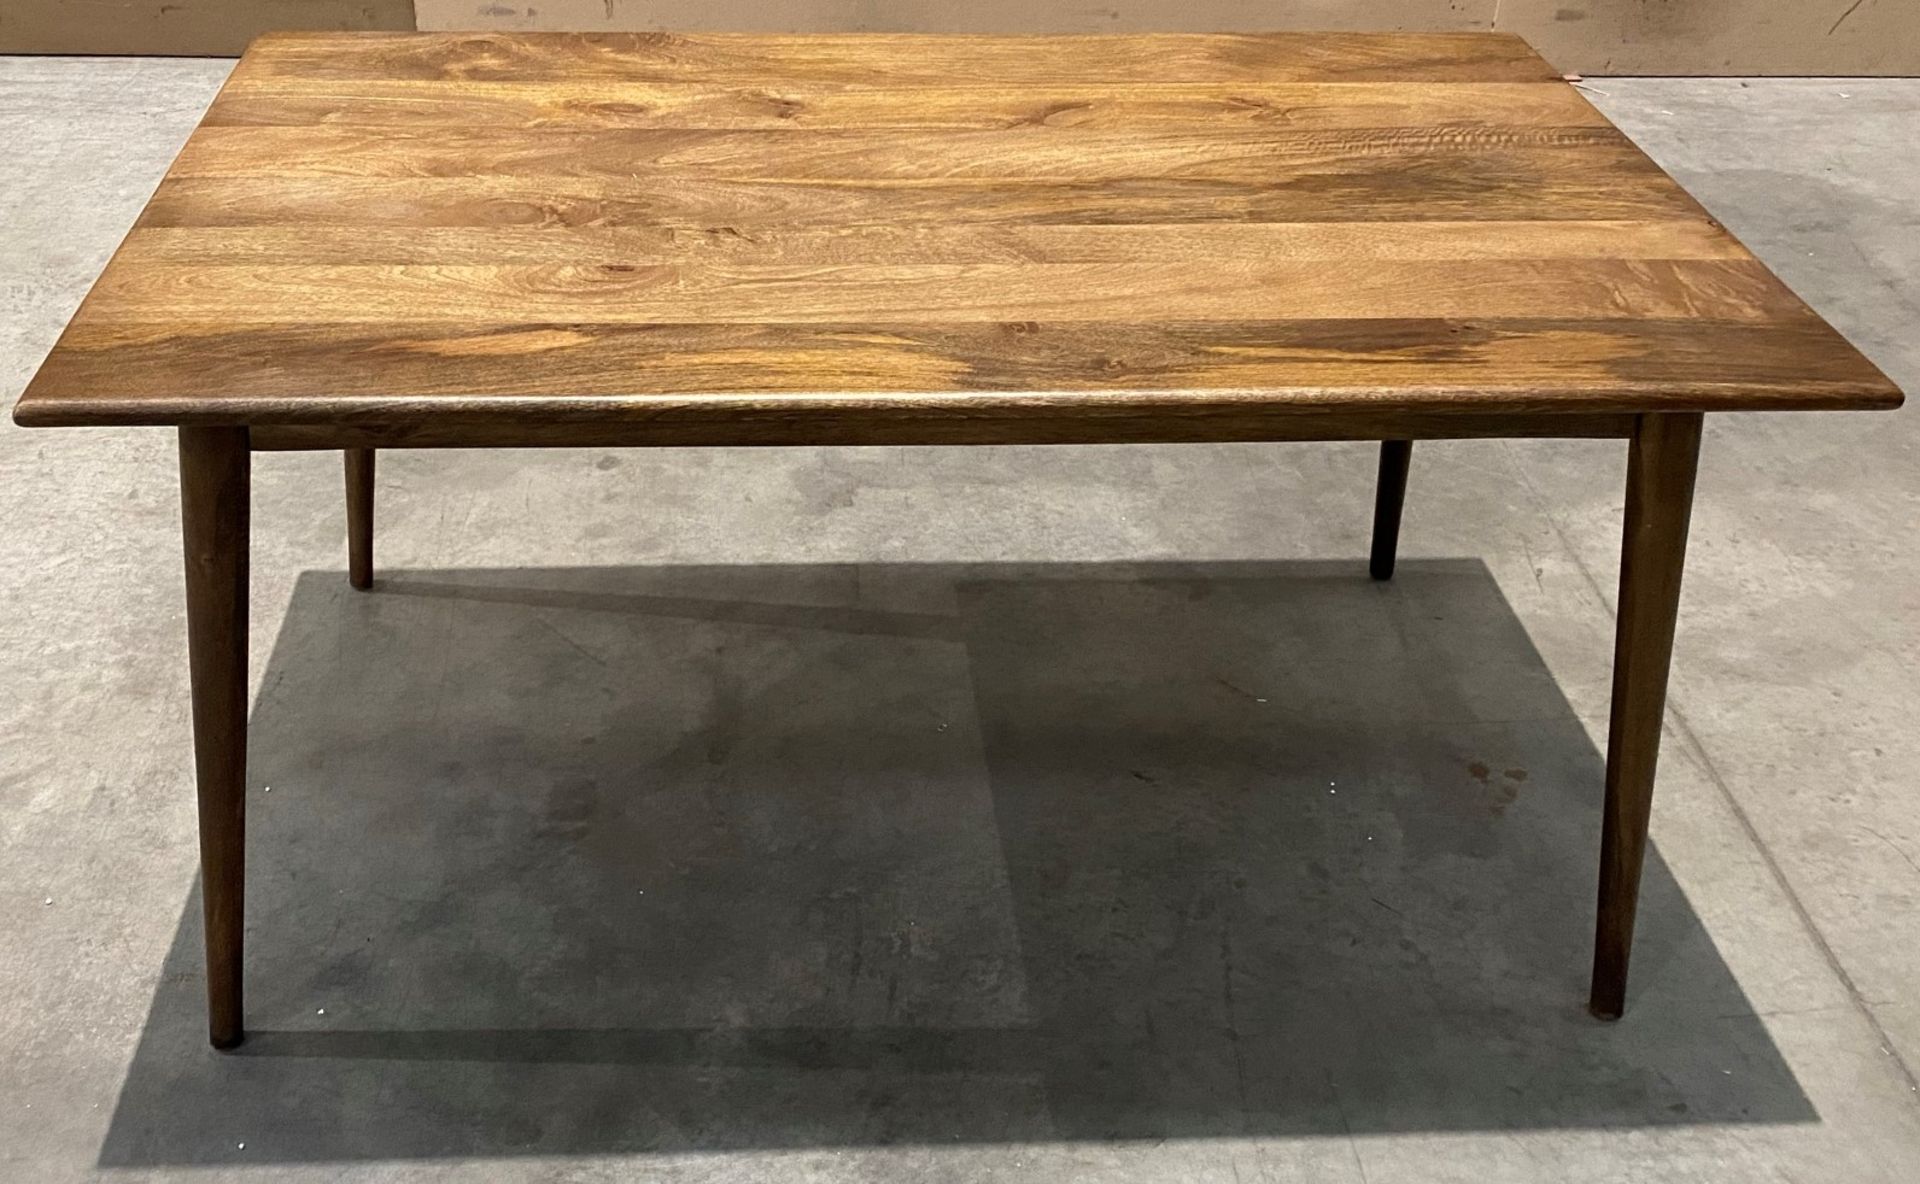 A Retro dark wood dining table - size 150cm x 90cm x 76.